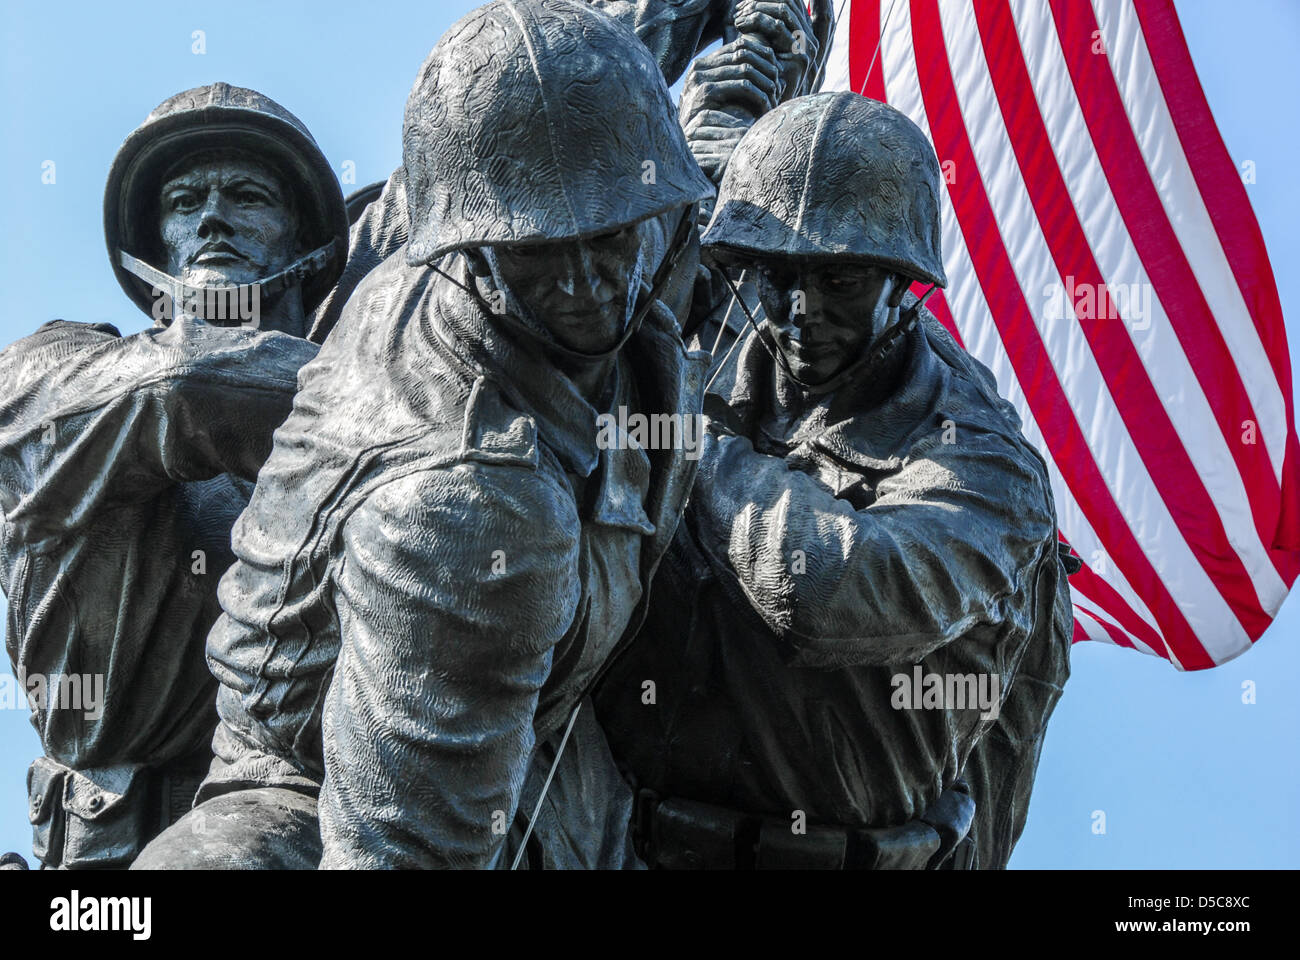 Iwo Jima Memorial in Arlington, Virginia – across the river from Washington D.C., USA. Stock Photo